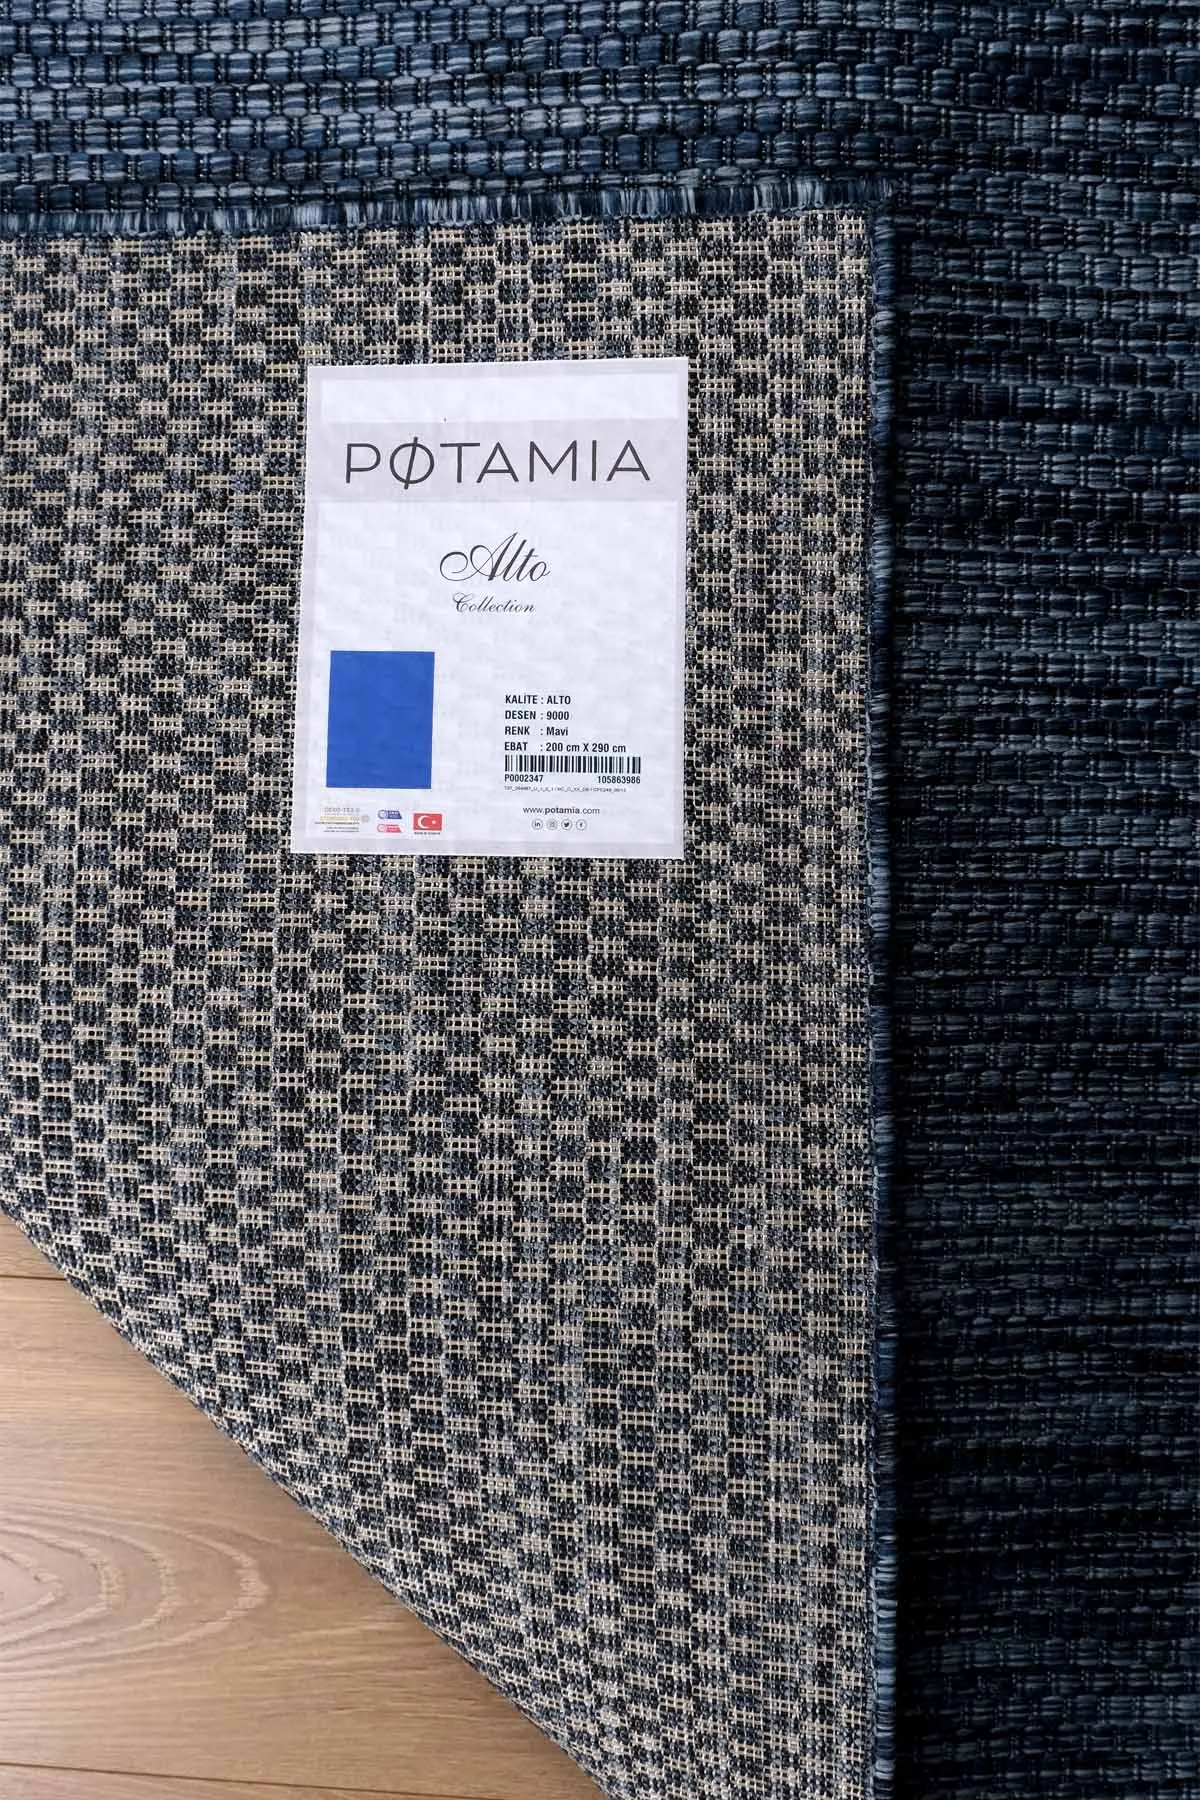 Potamia Alto Lacivert Sisal Dekoratif İnce Makine Halısı 9000 - Thumbnail